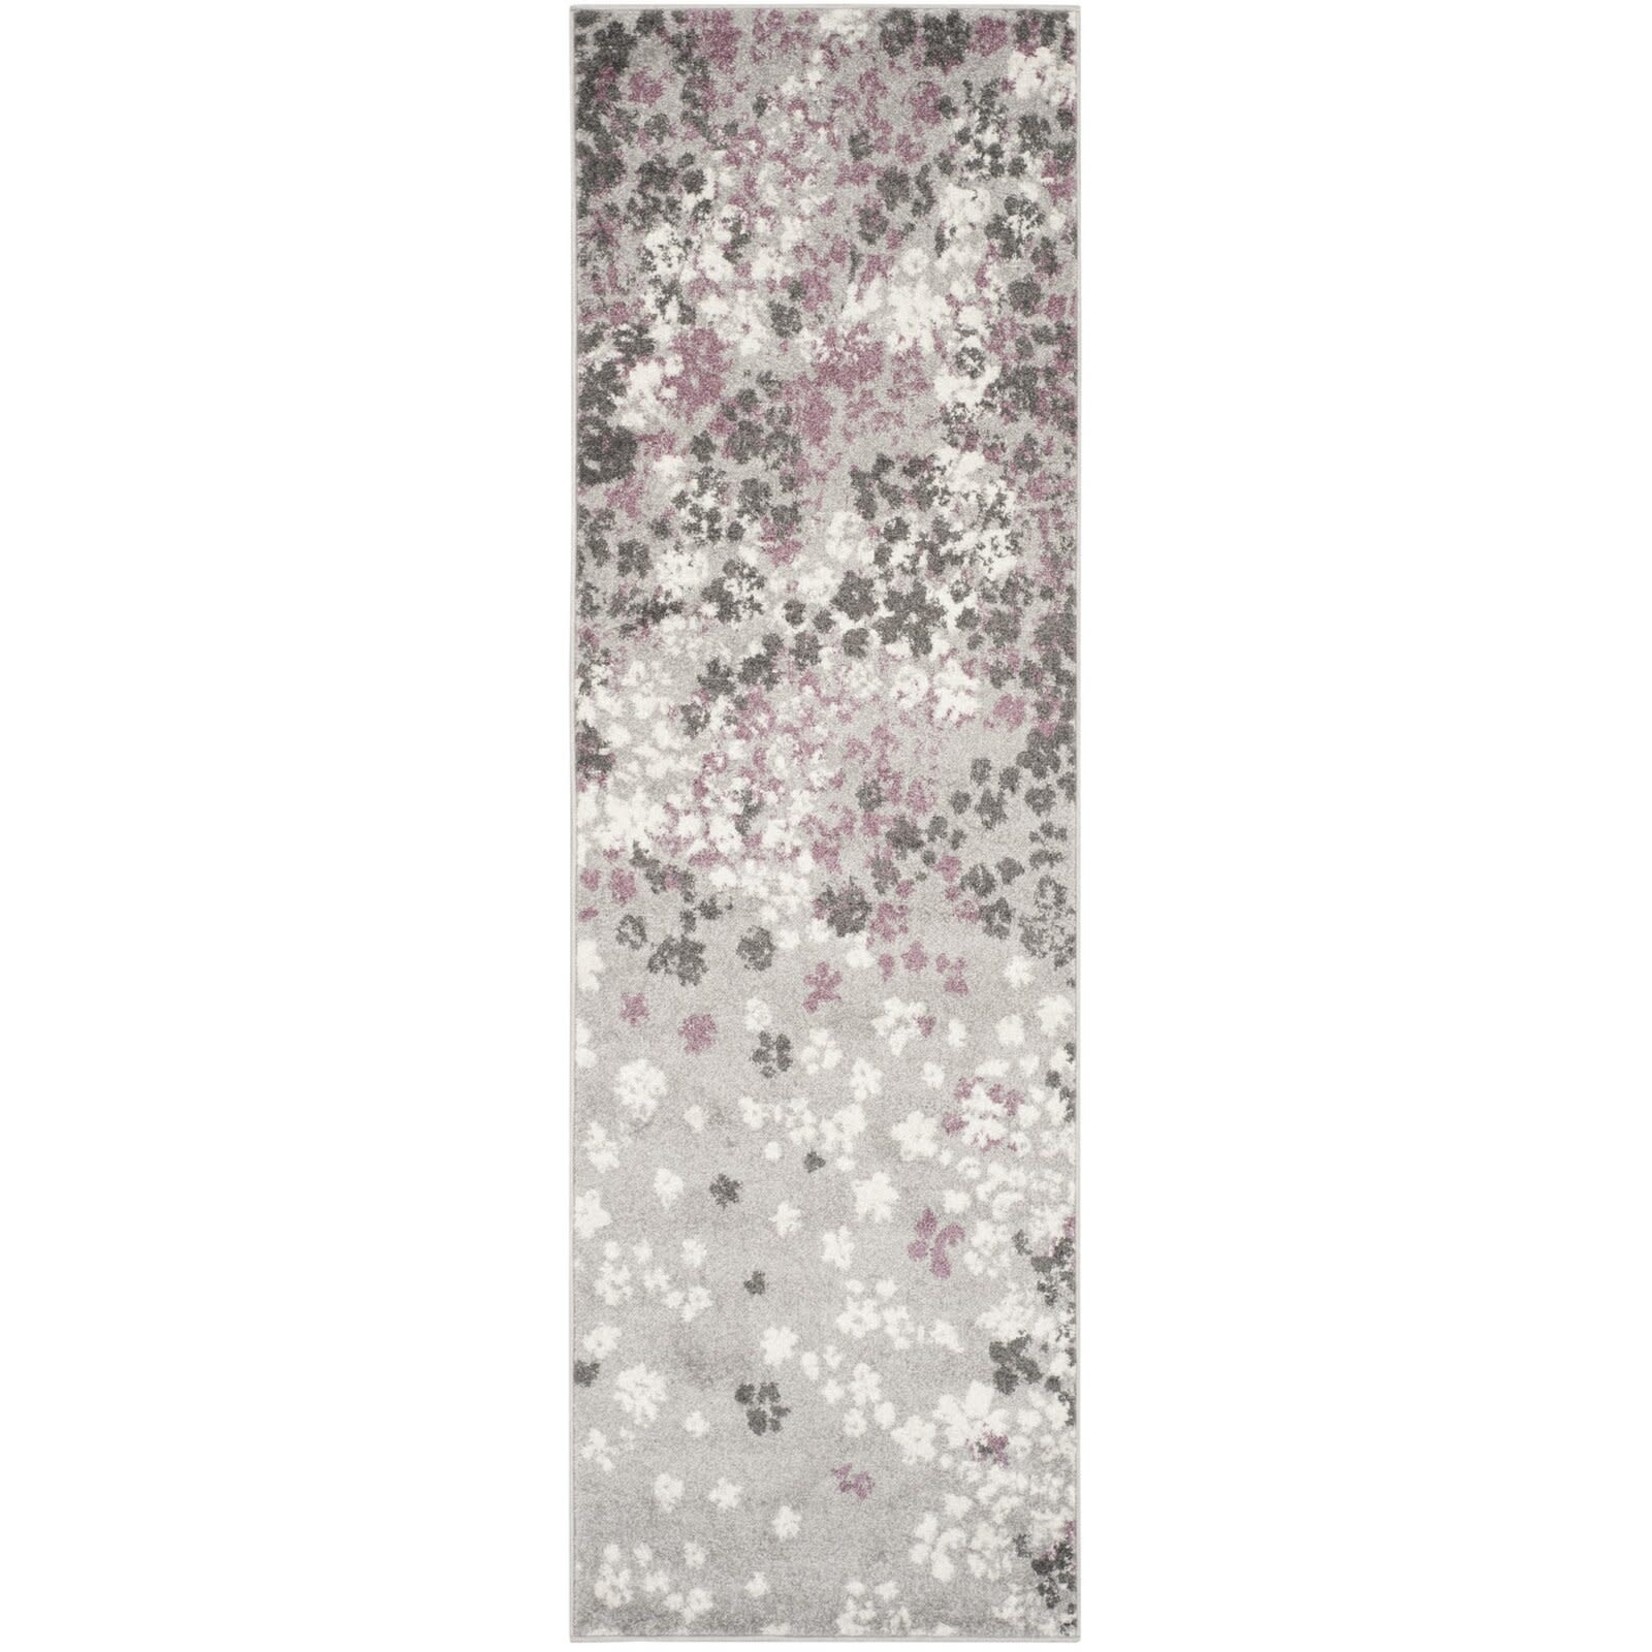 *2'6 x 4' Galli Floral Gray/Purple Area Rug